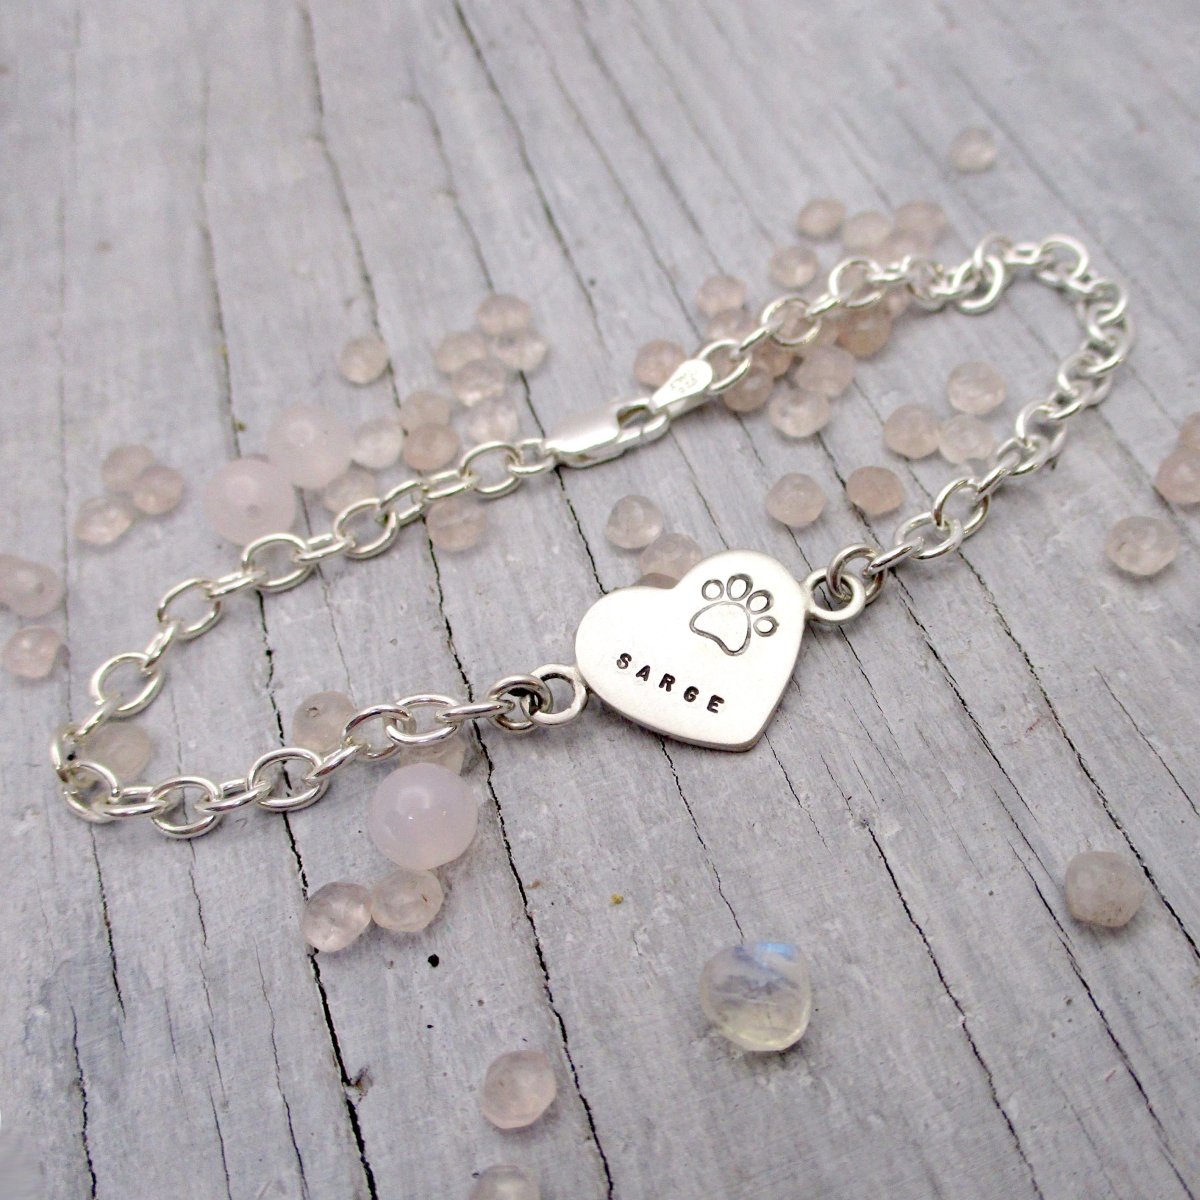 Personalized Heart Paw Bracelet in Sterling Silver - Luxe Design Jewellery